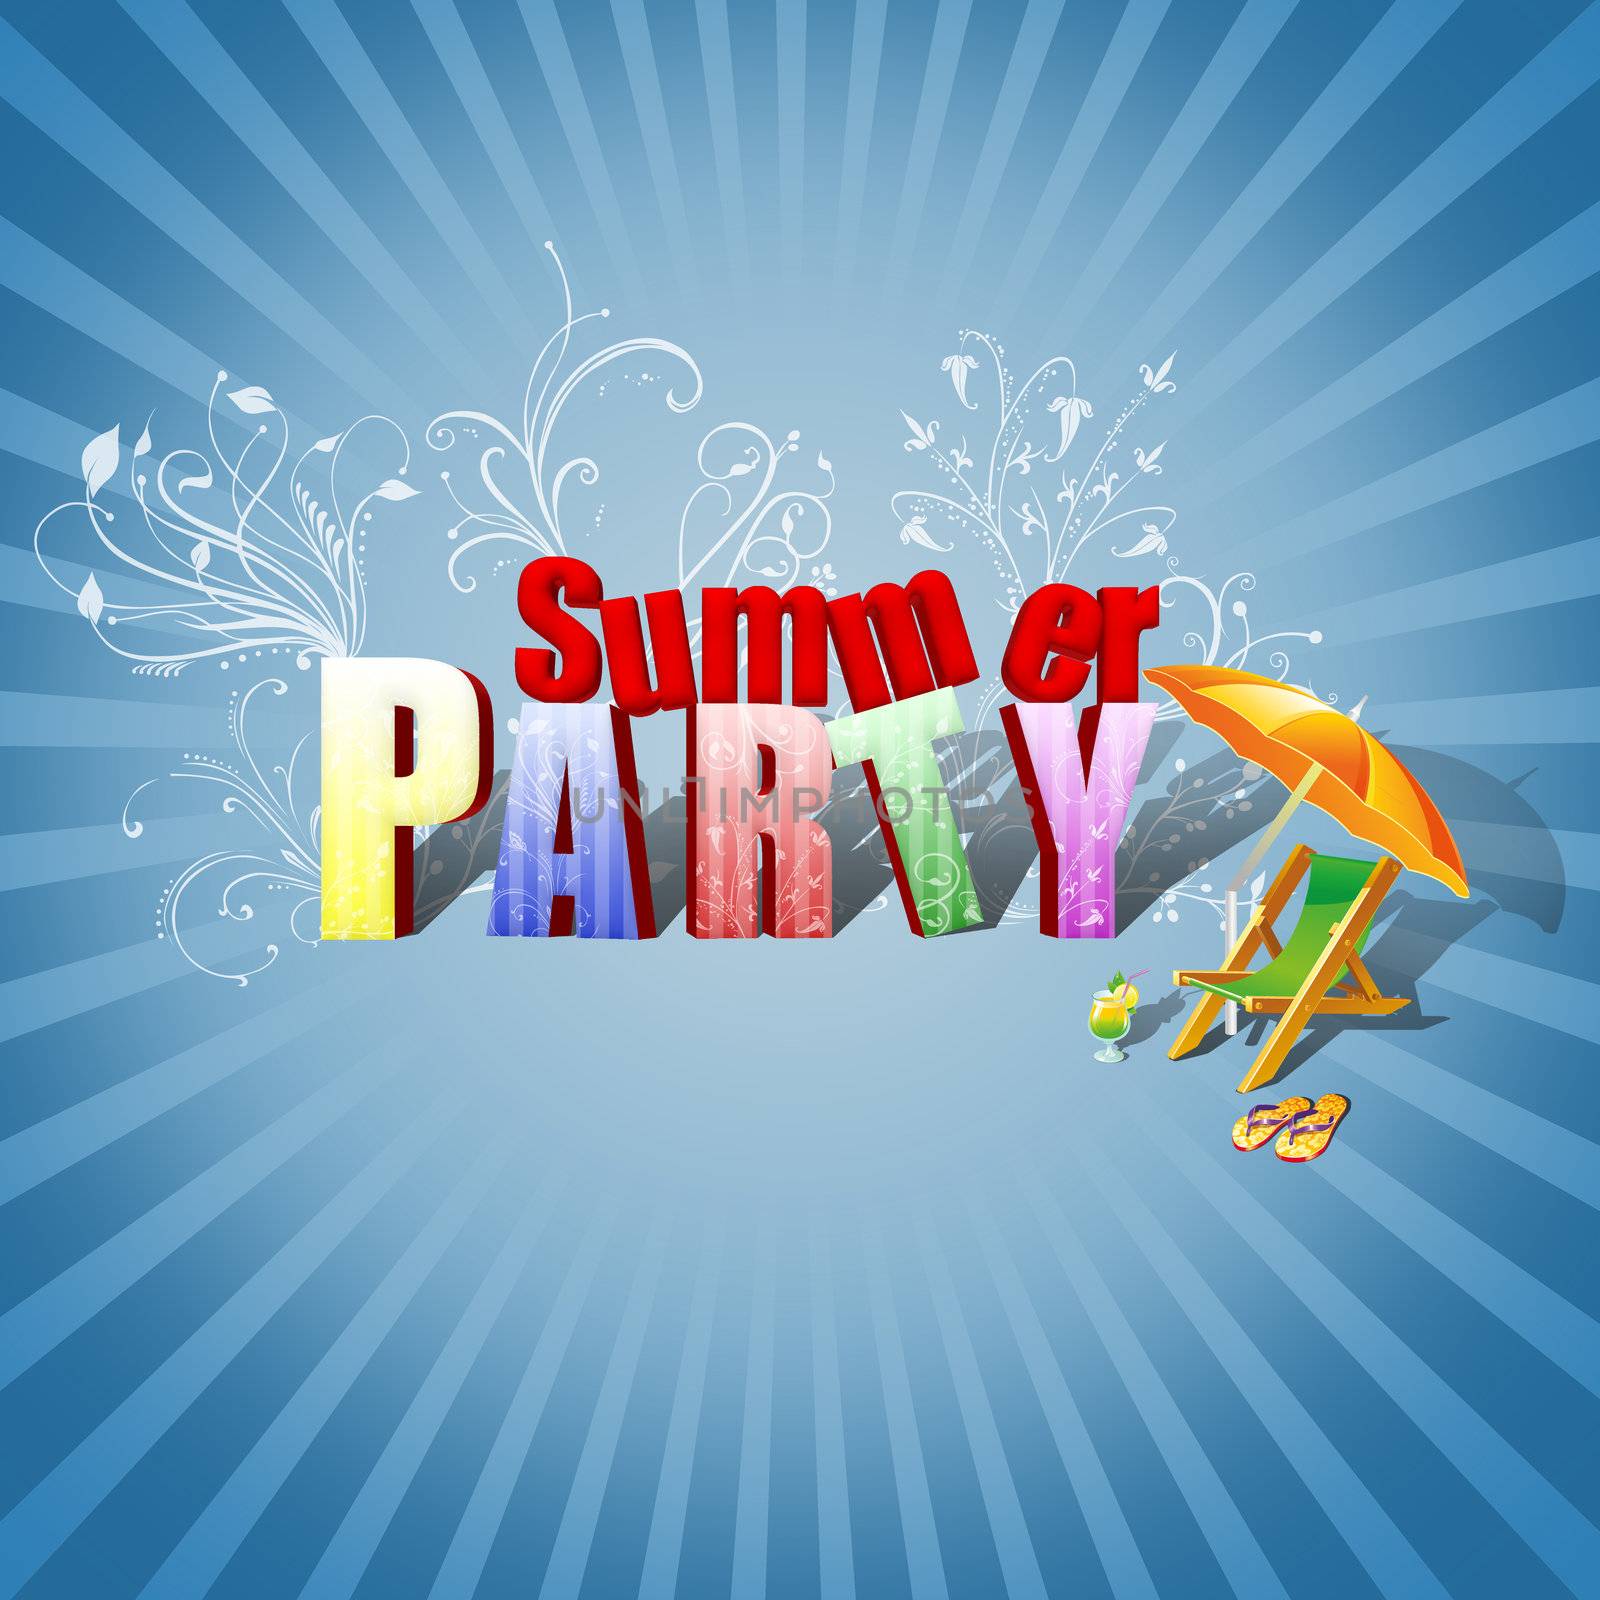 Summer Party Illustration by SorayaShan